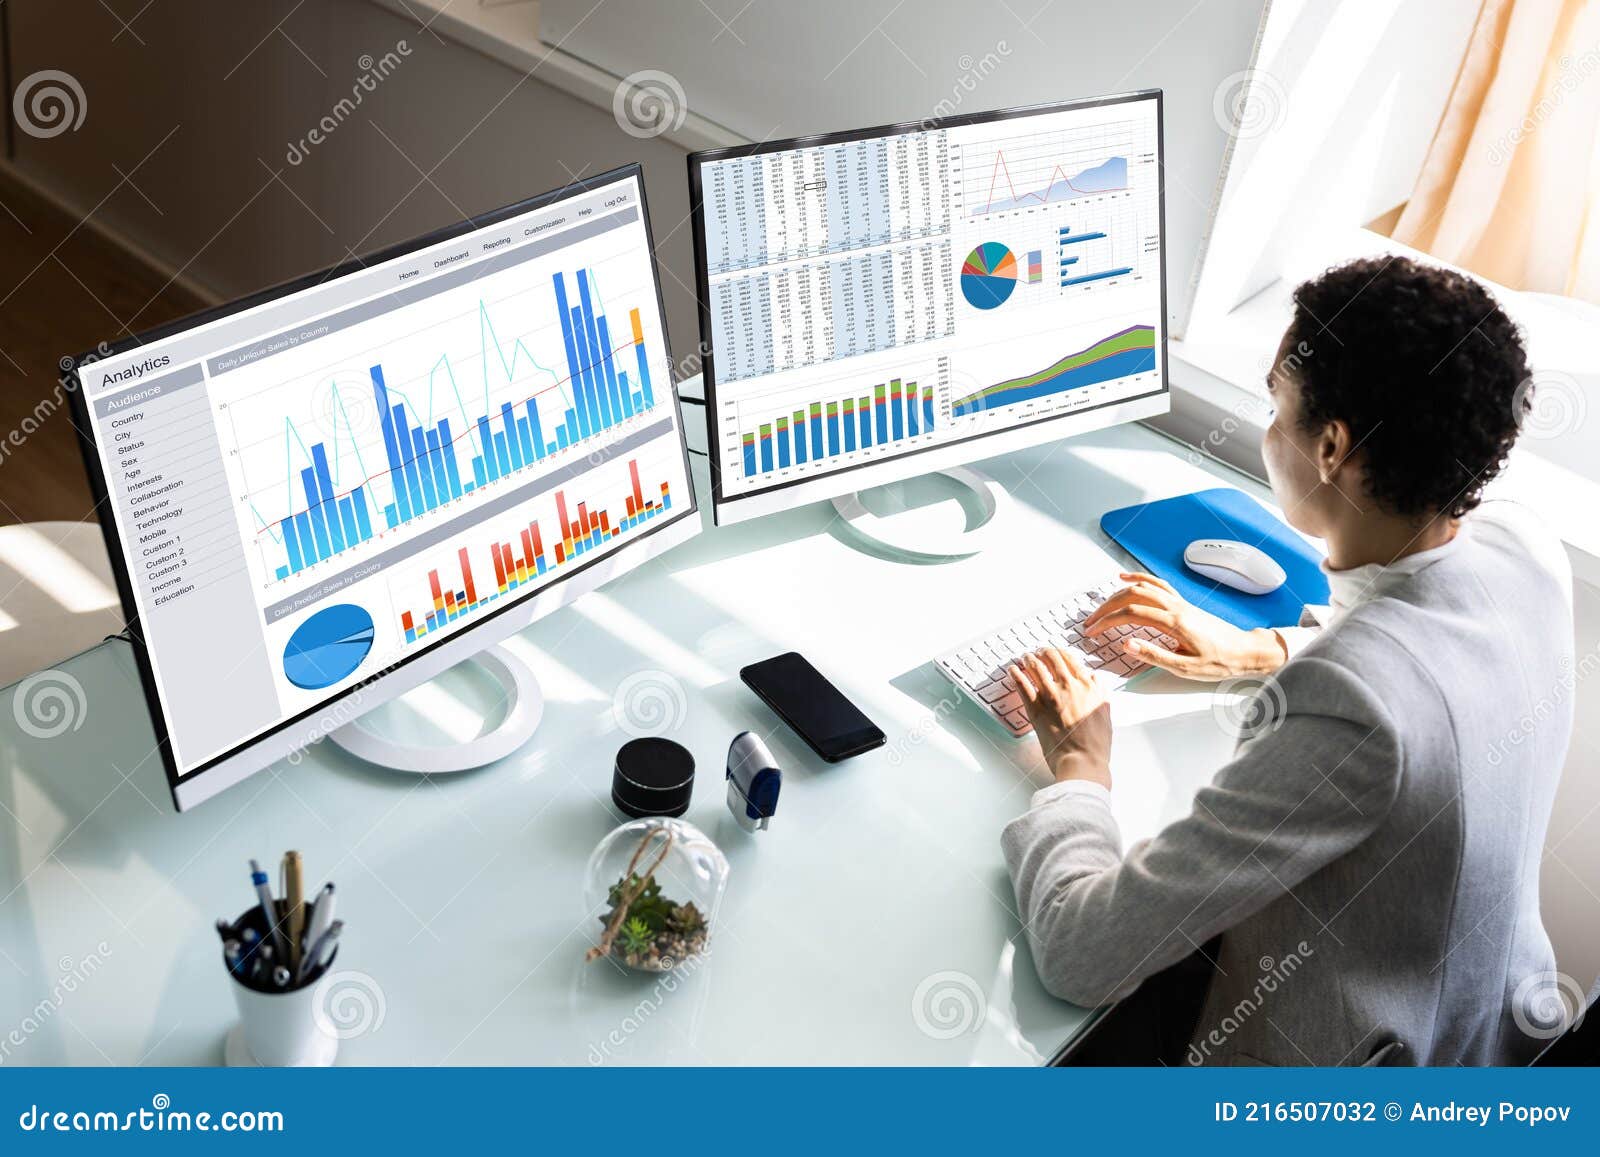 financial business analytics data dashboard